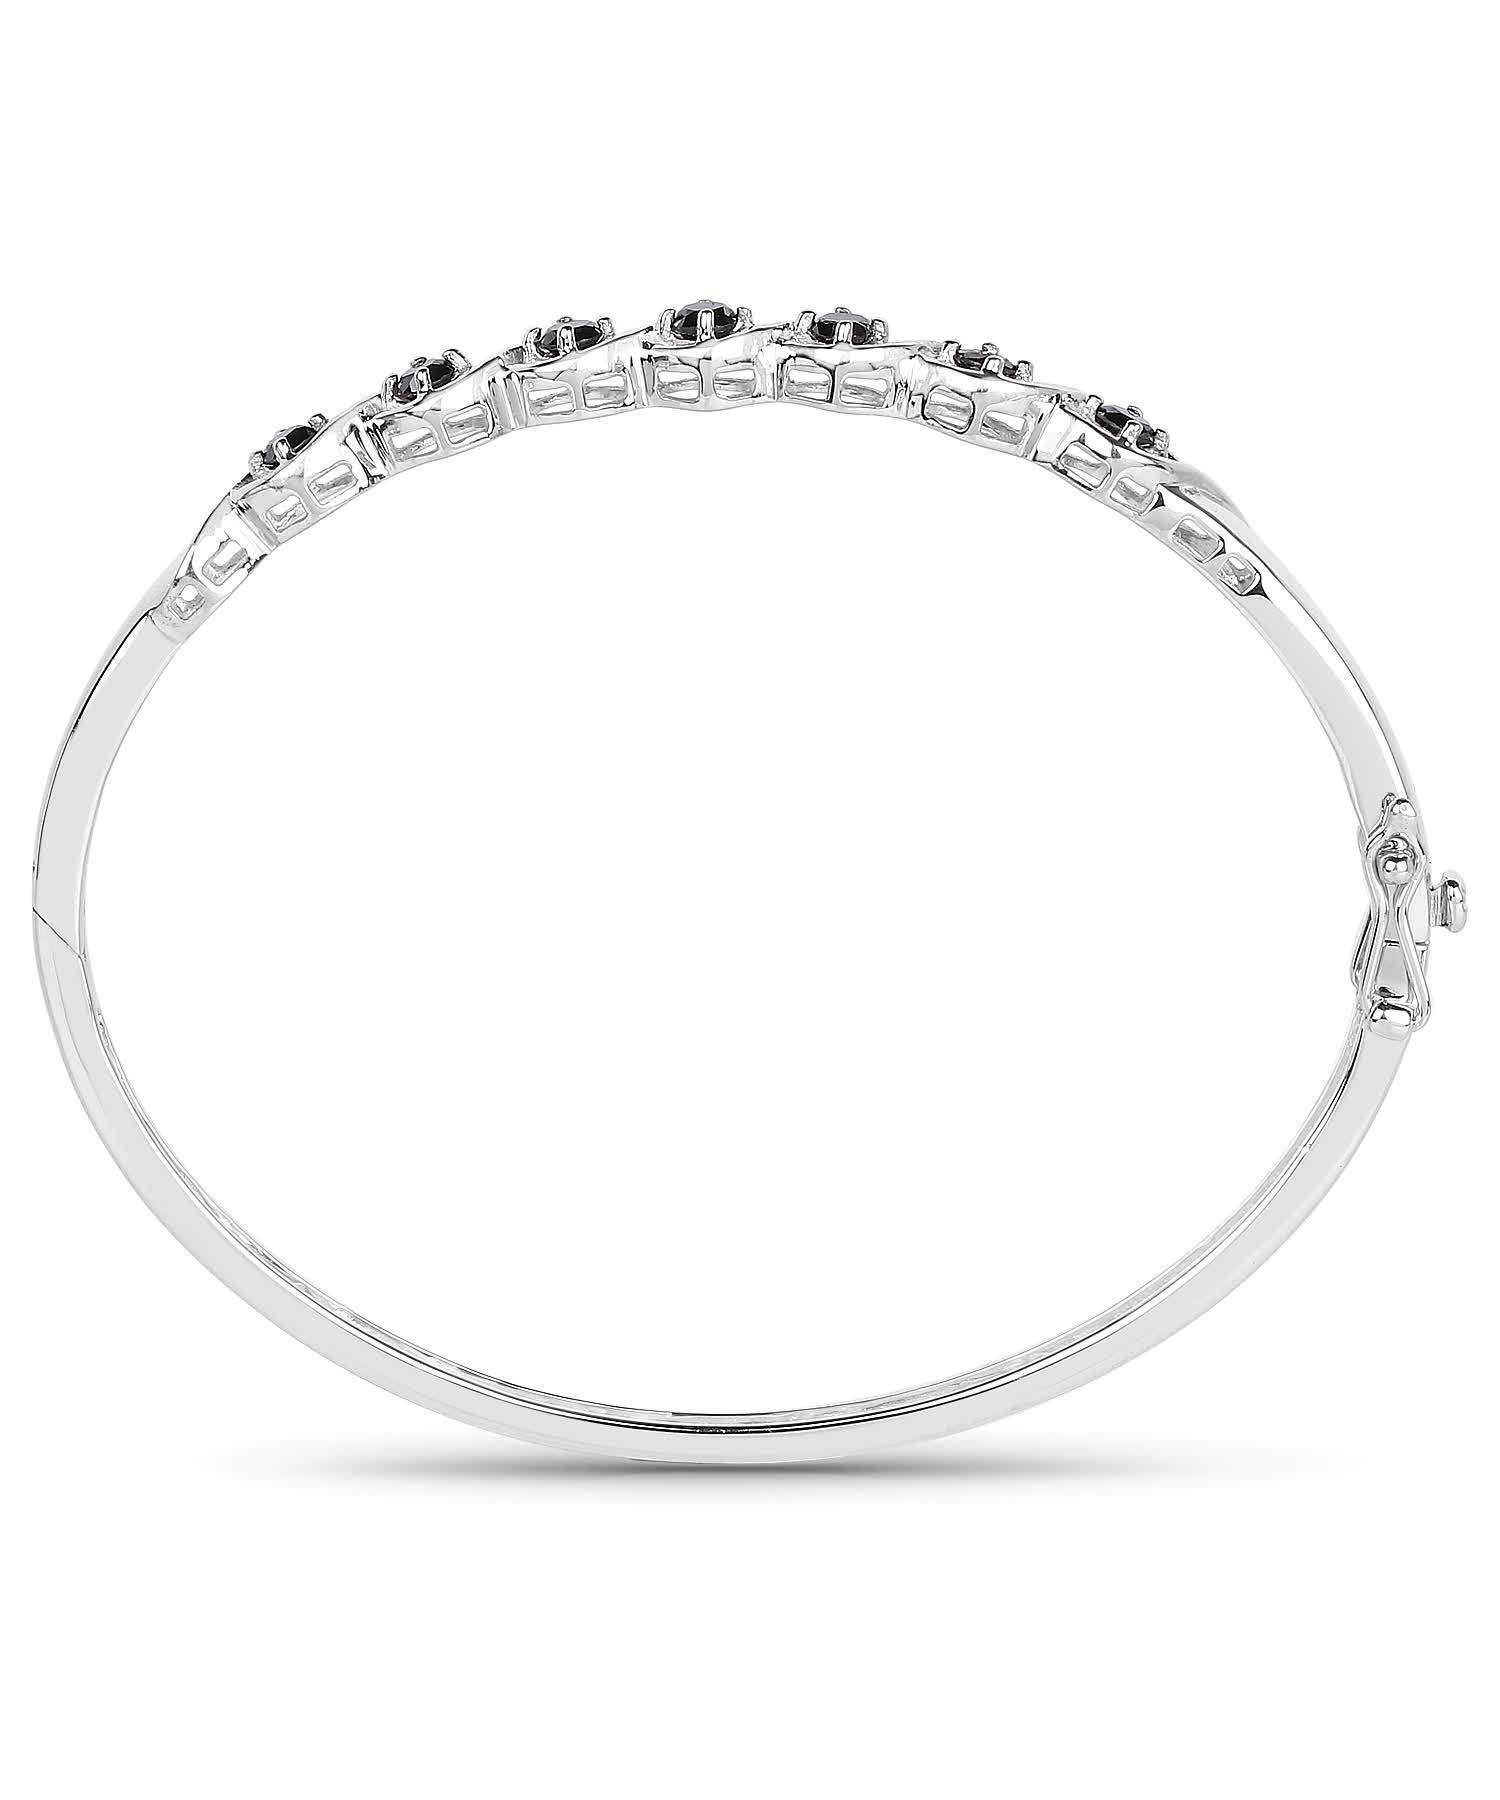 1.03ctw Black Diamond Rhodium Plated 925 Sterling Silver Bangle Bracelet View 2